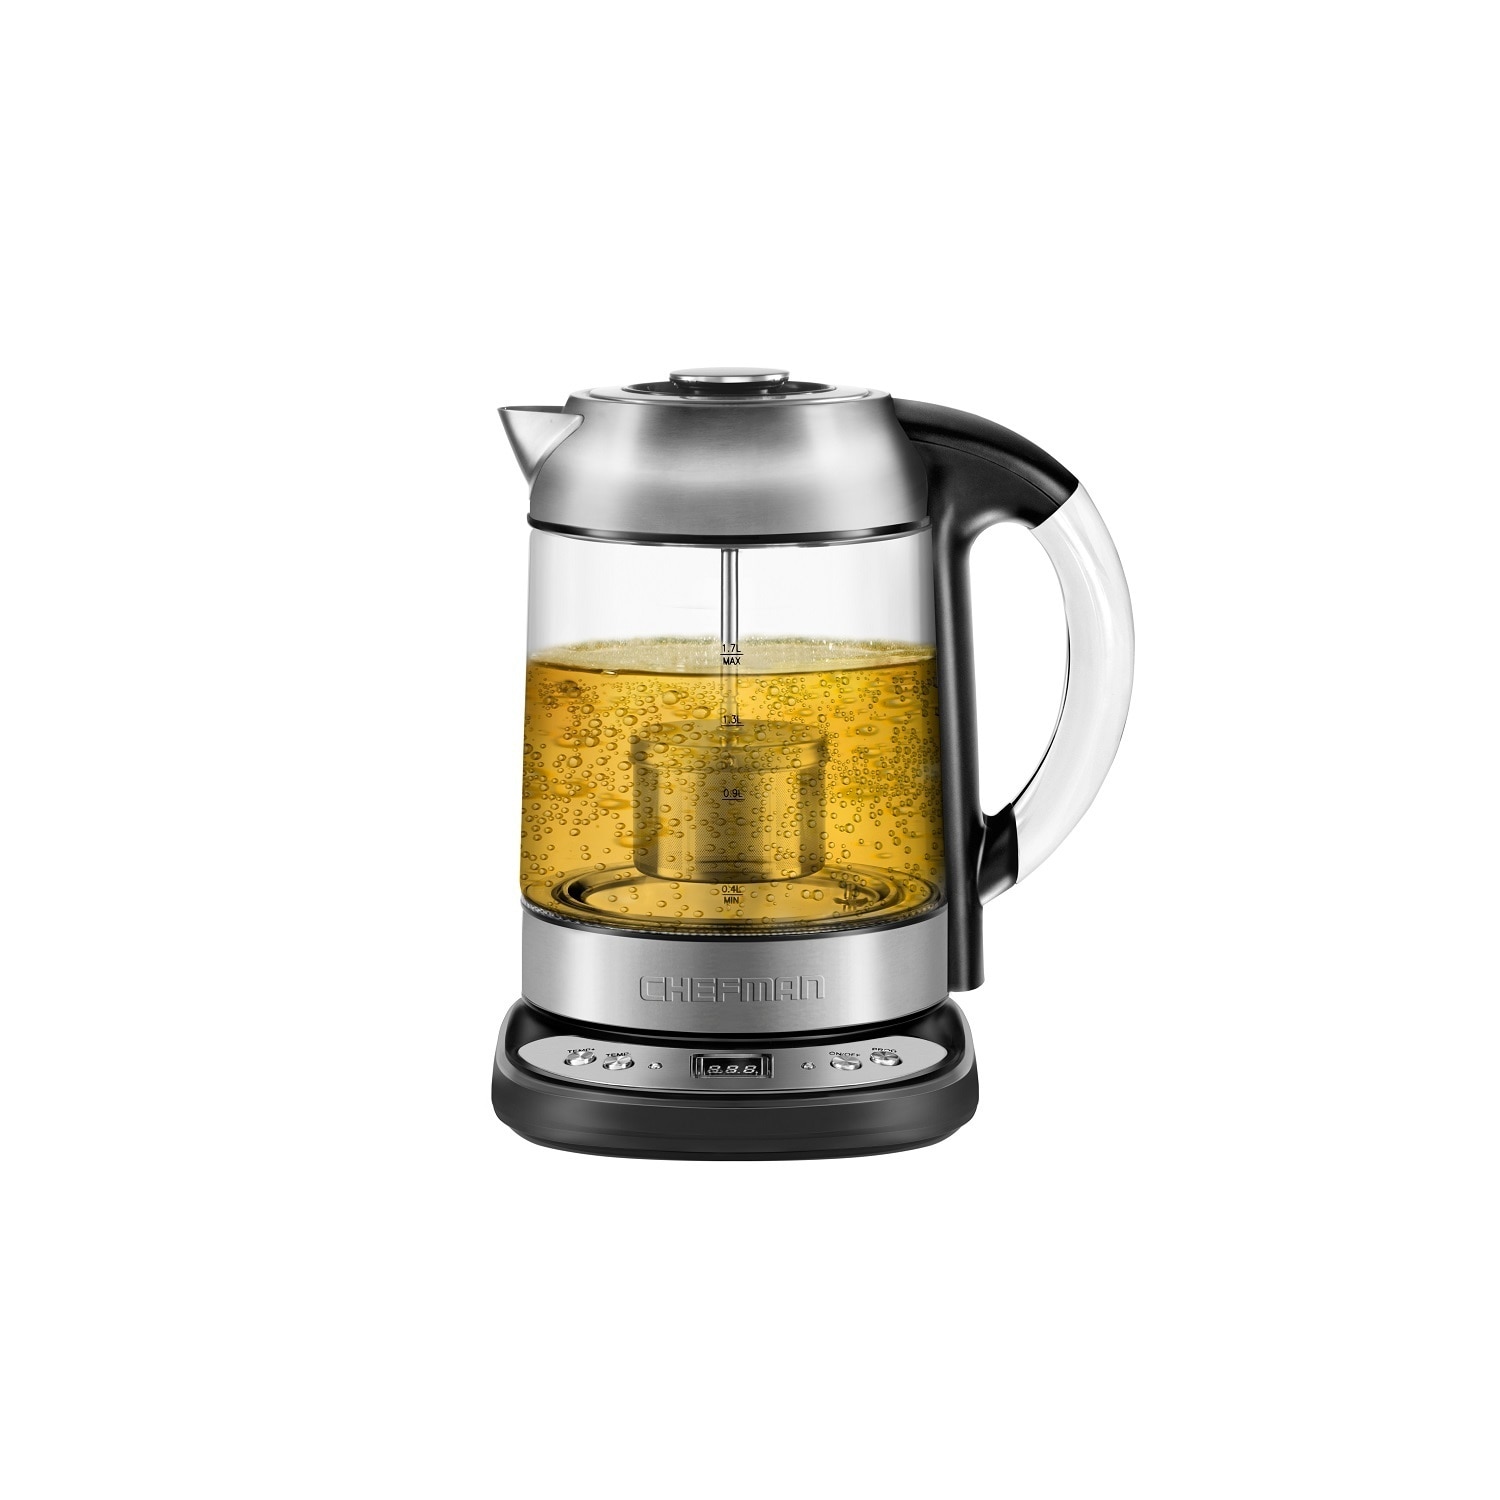 tea infuser electric kettle